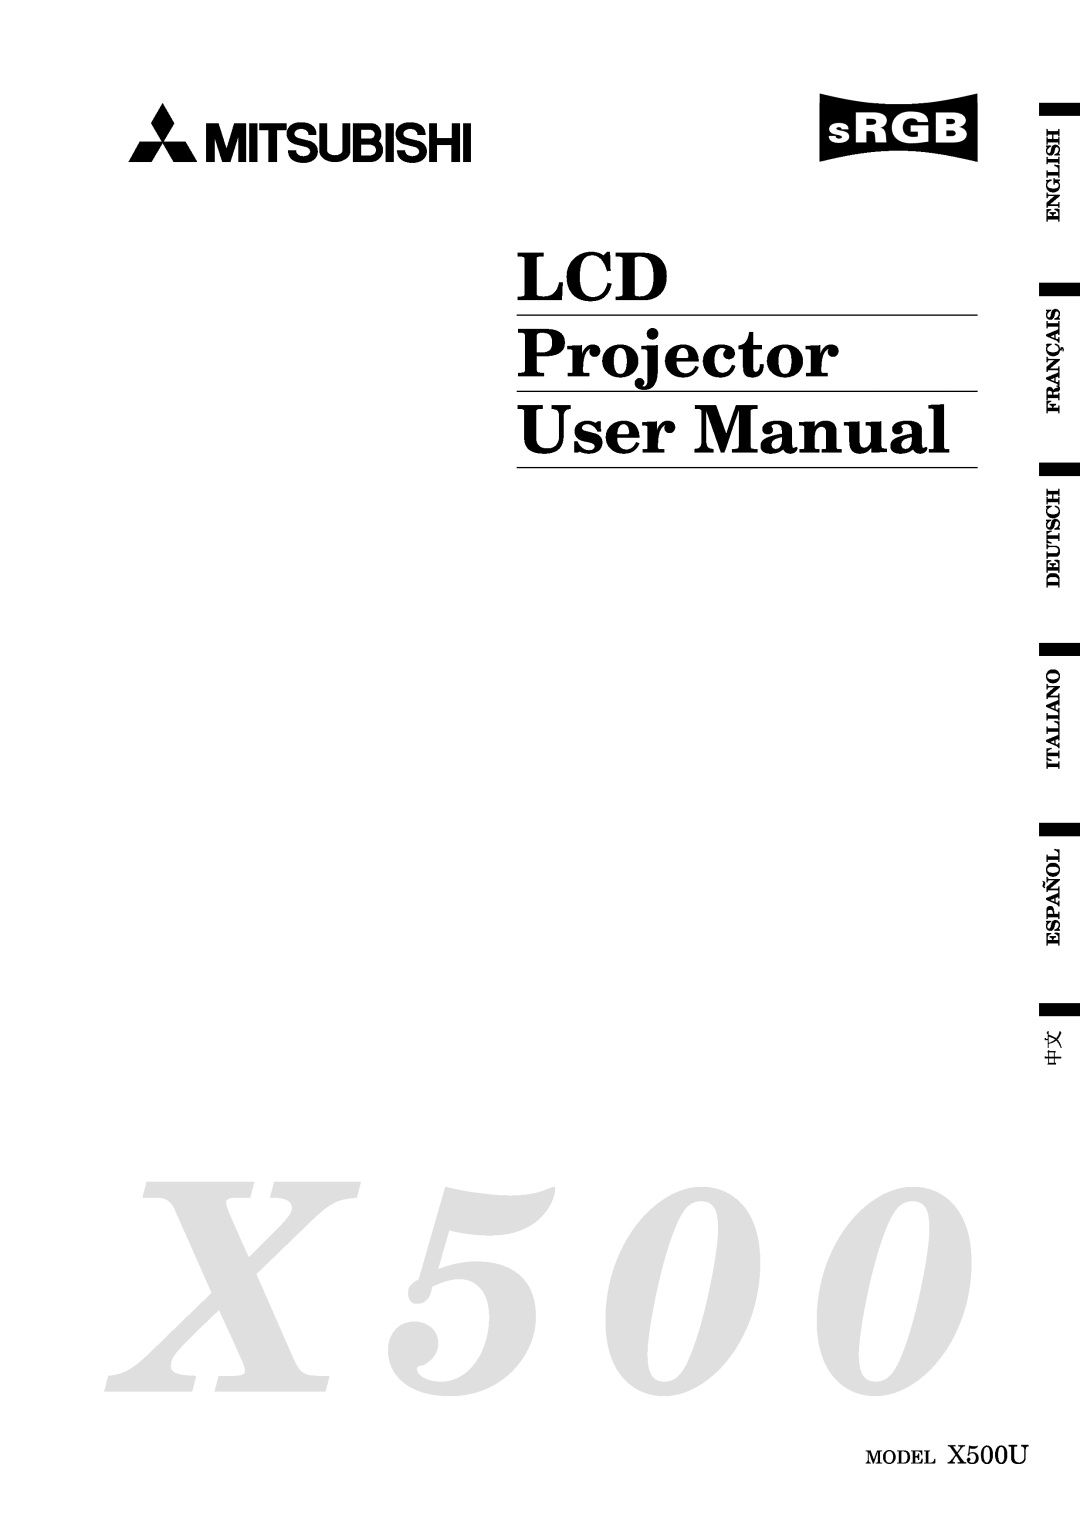 Mitsubishi Electronics X500U user manual X 5 0, LCD Projector User Manual, English Français Deutsch Italiano Español 